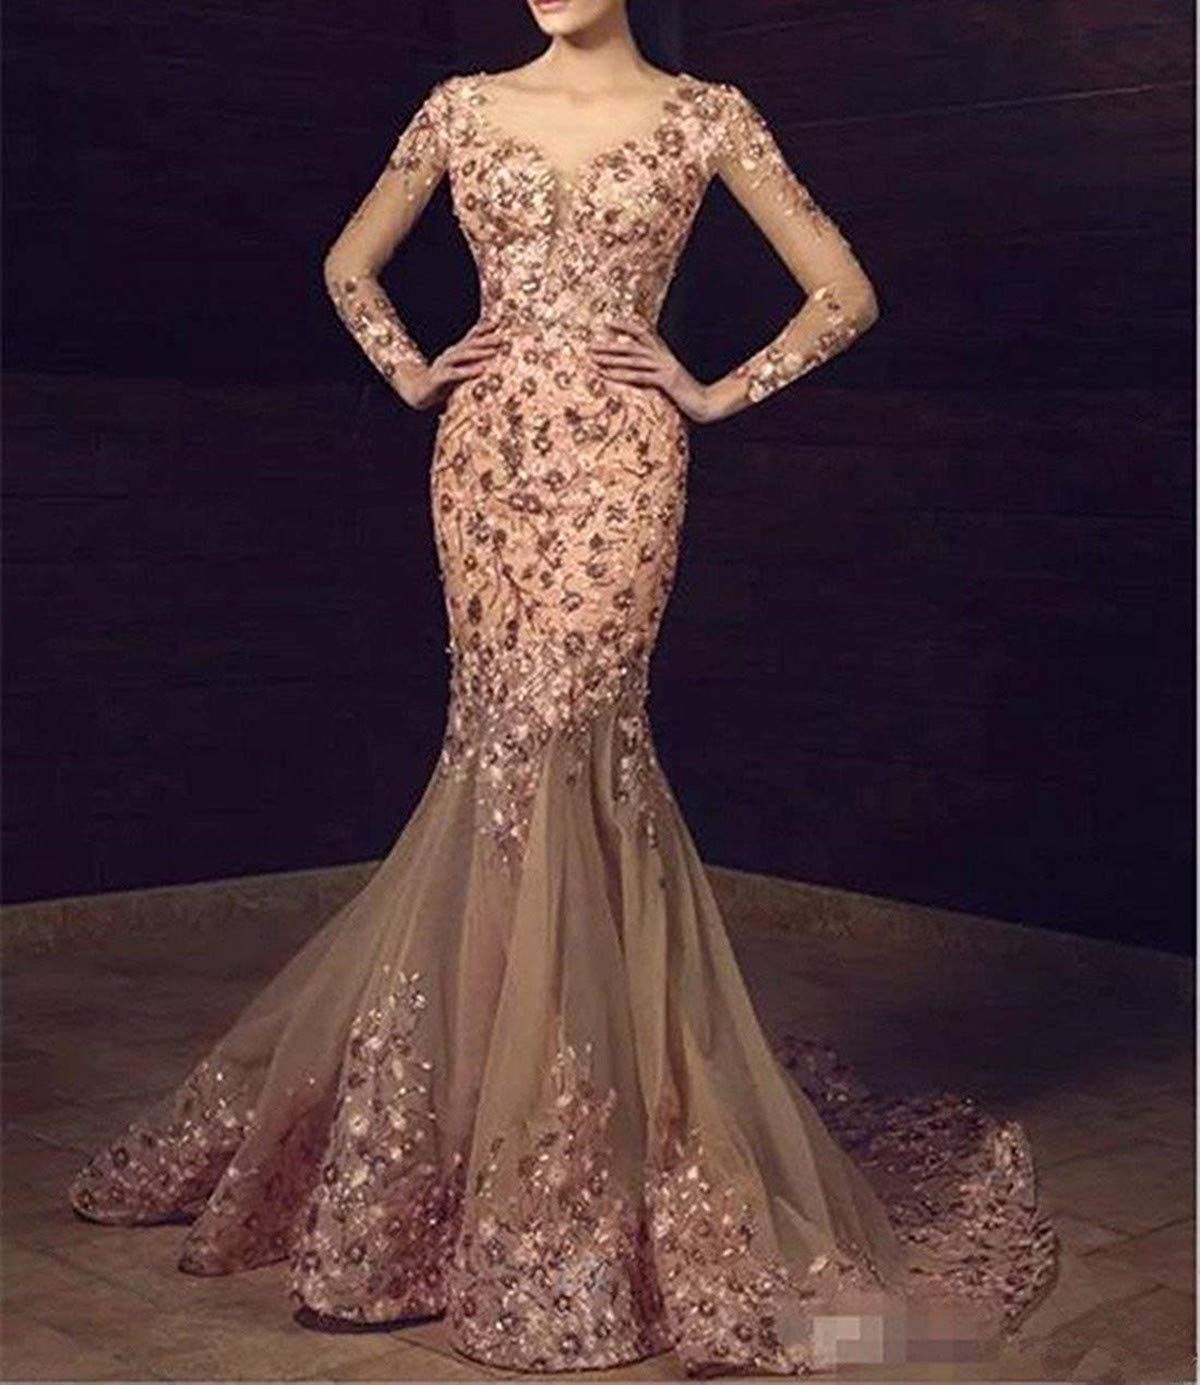 Aries Tuttle Skin s Mermaid Wedding Evening Dress Prom Gown Detachable Train